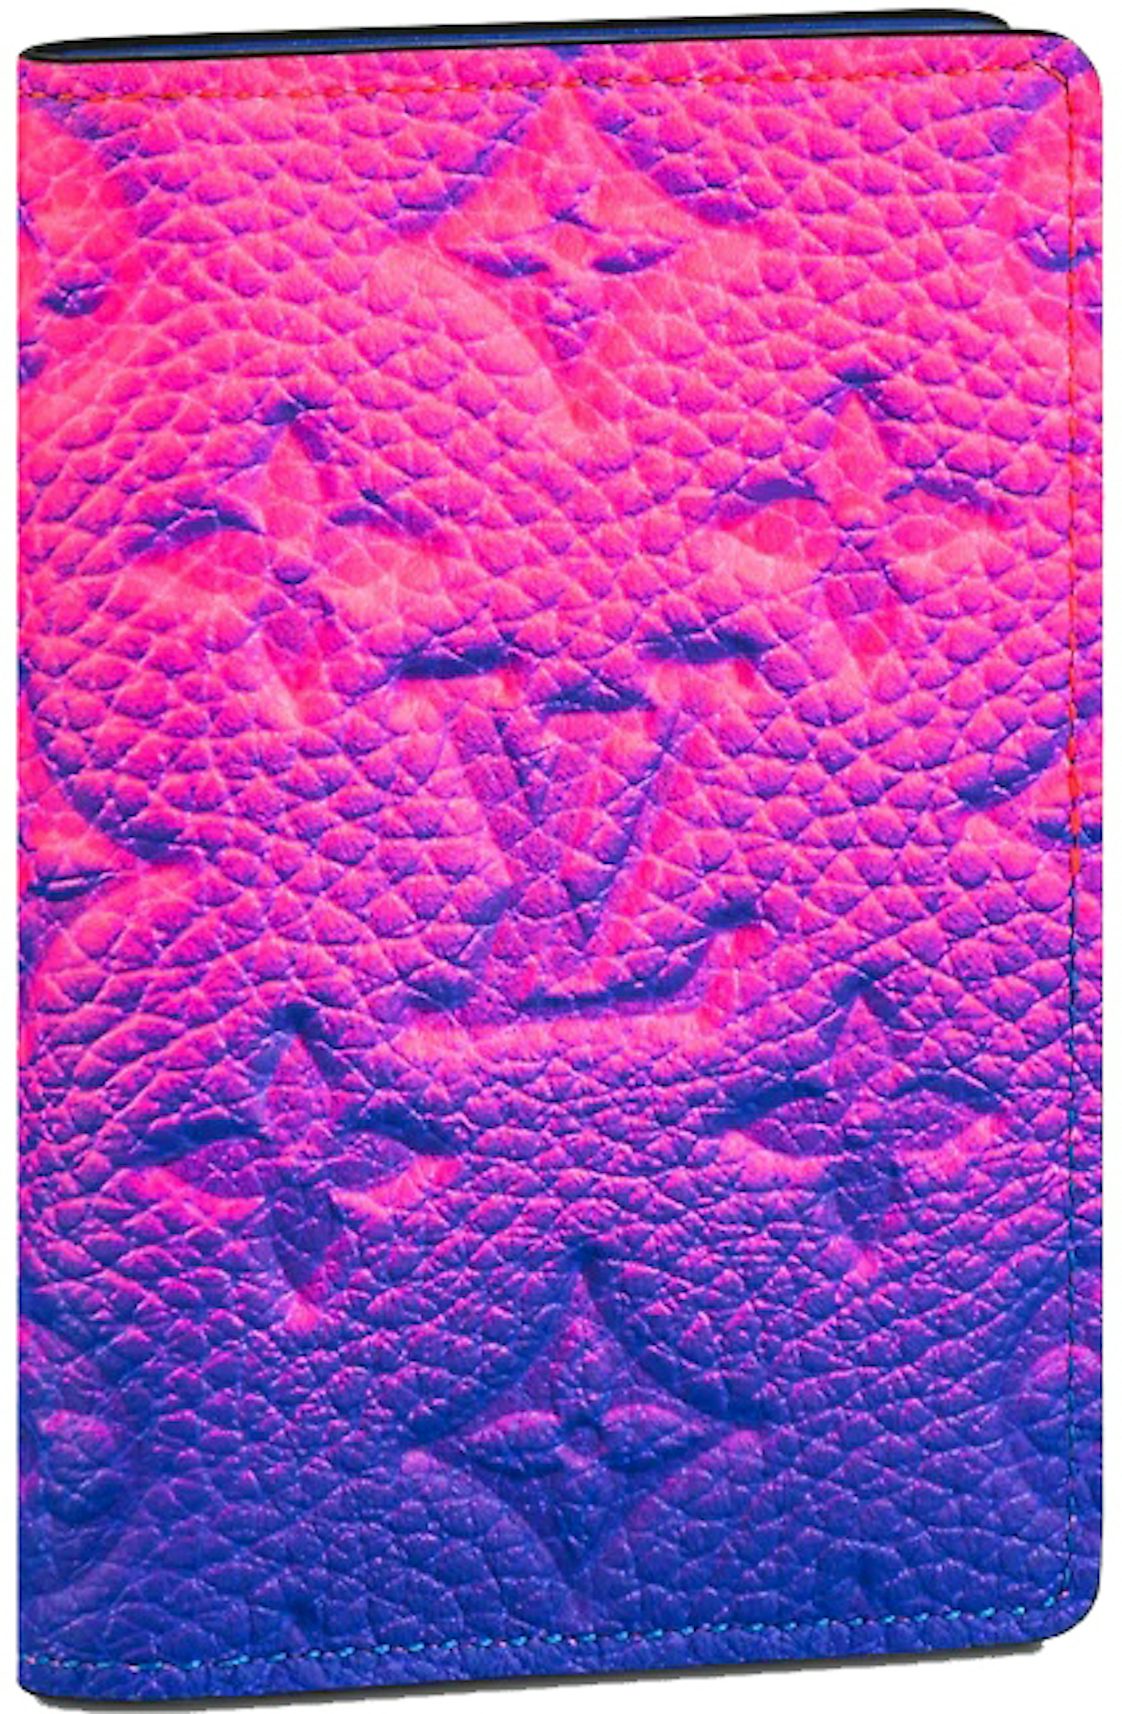 Louis Vuitton Pocket Organizer Taurillon Illusion Blue/Pink in